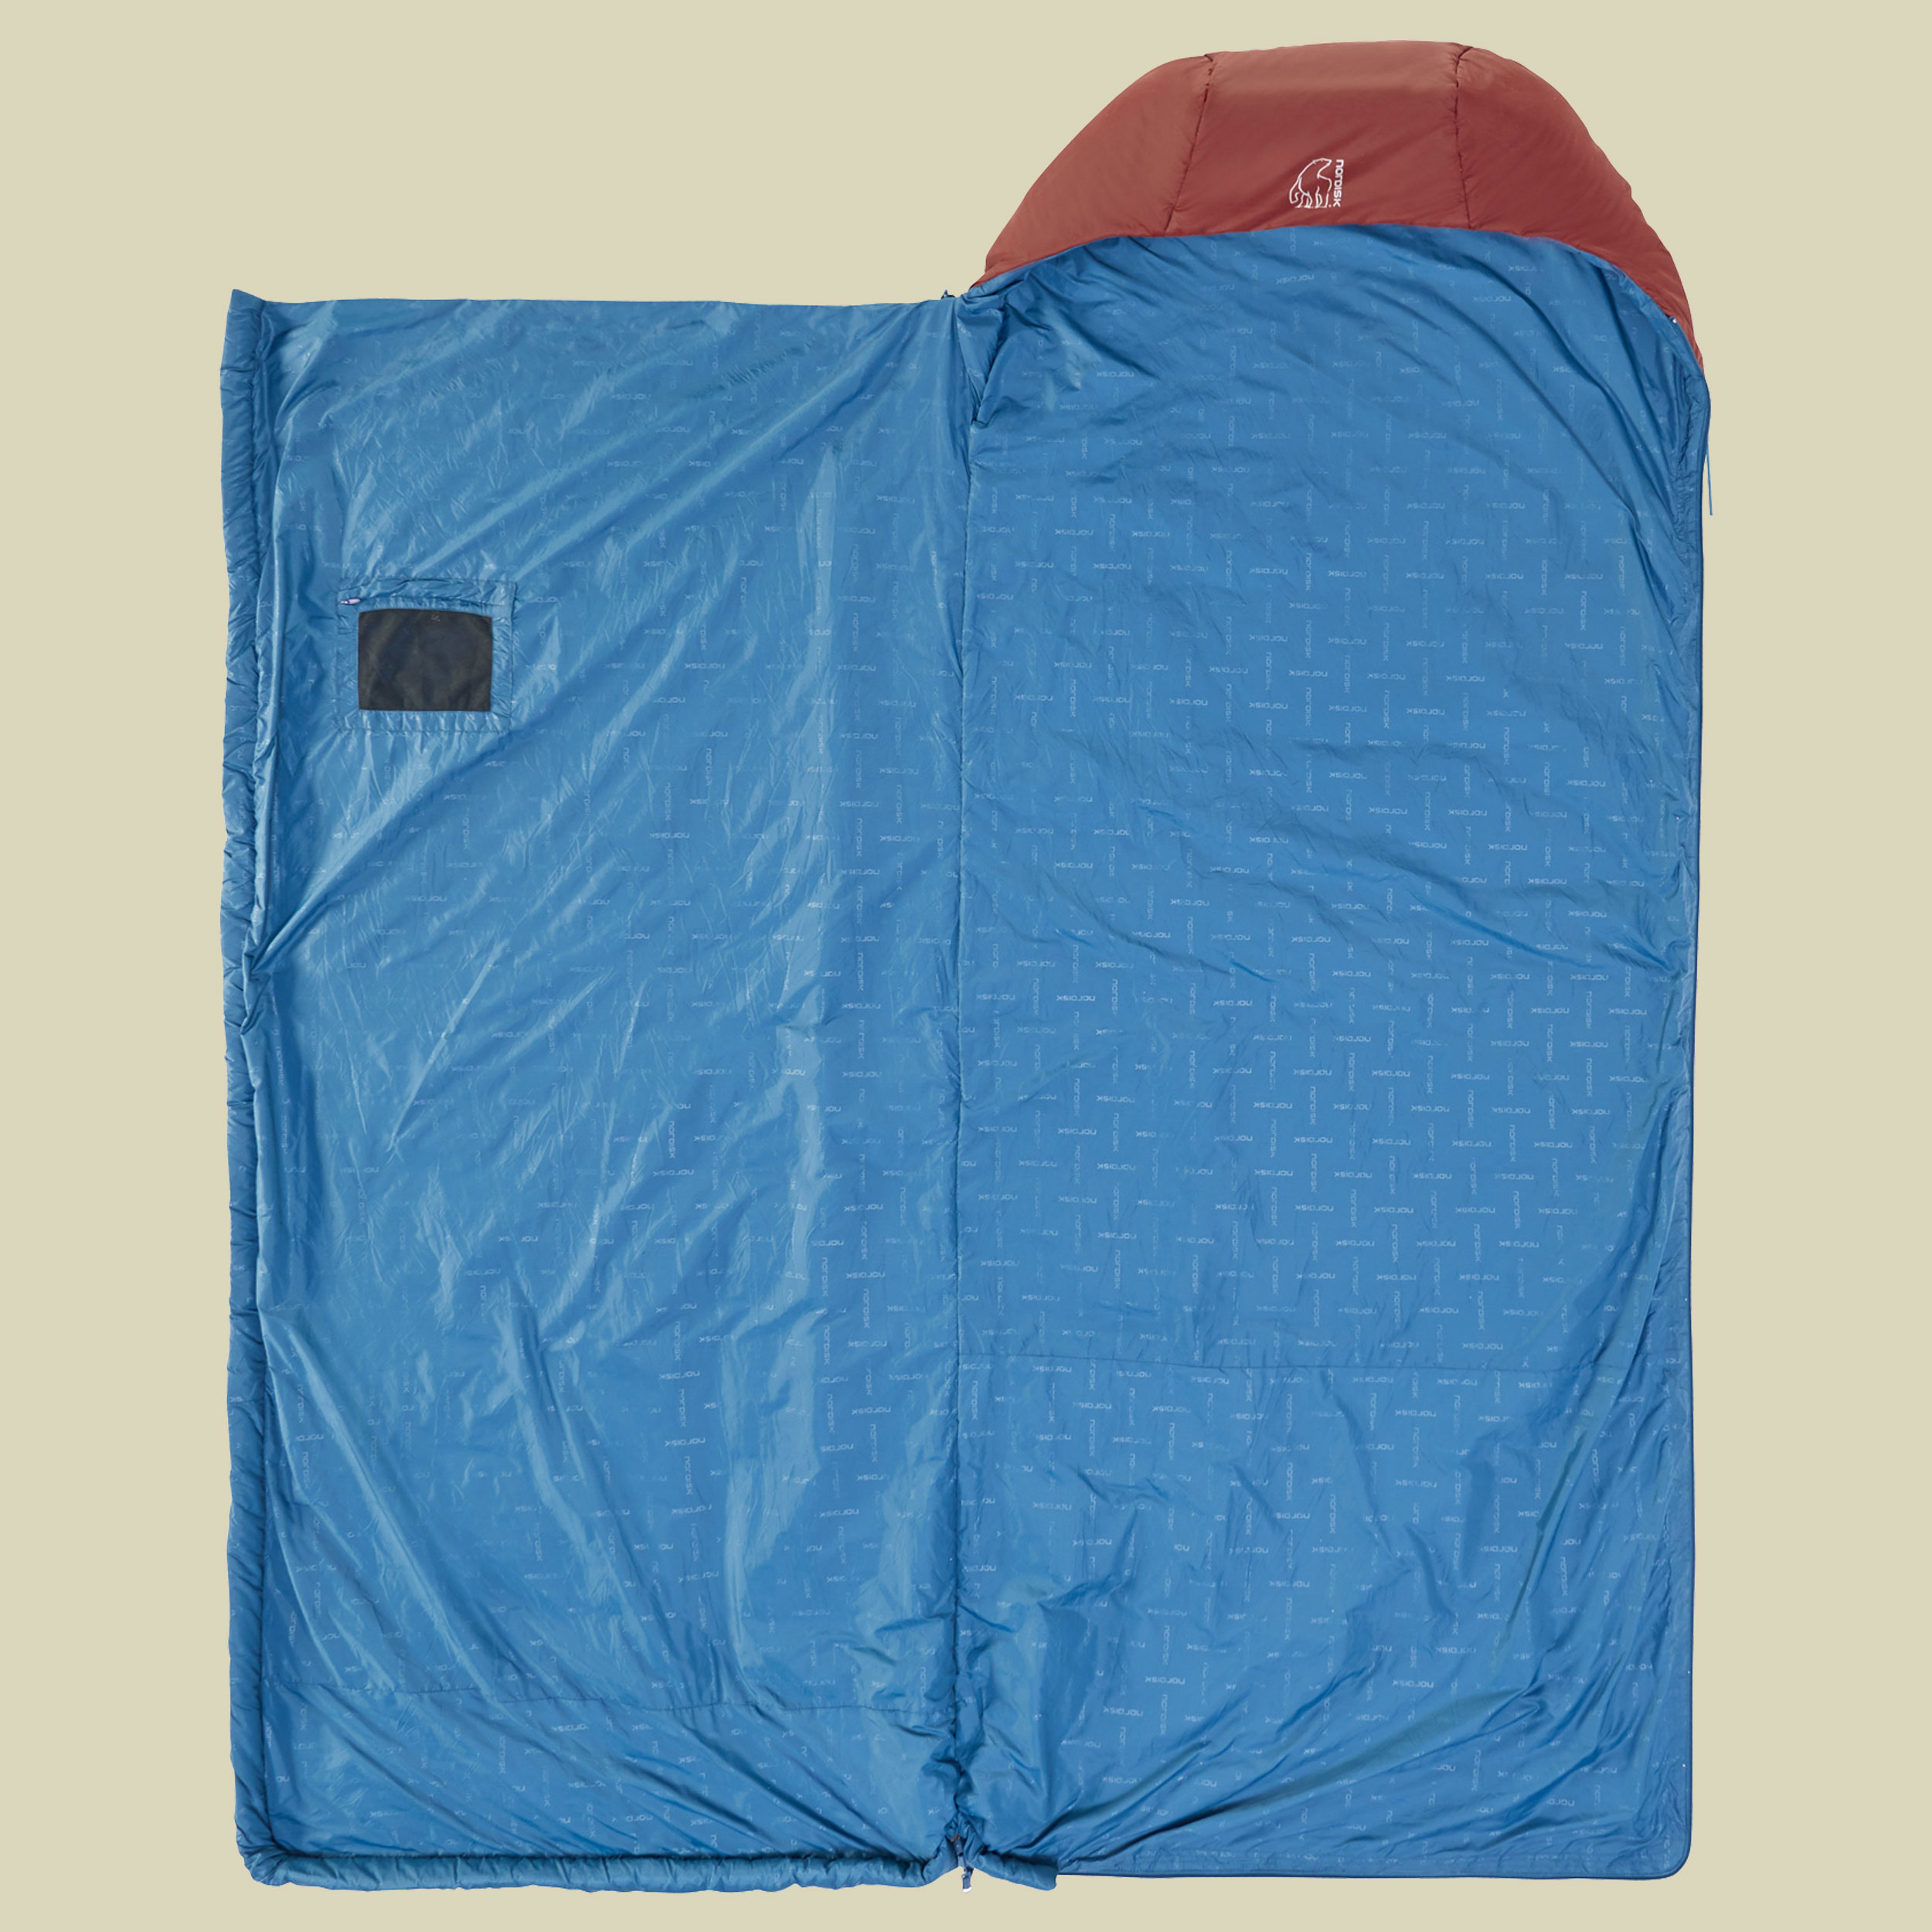 PUK +10 Blanket bis Körpergröße 175 cm Farbe sun-dried tomato/majolica blue/syrah, Reißverschluss links